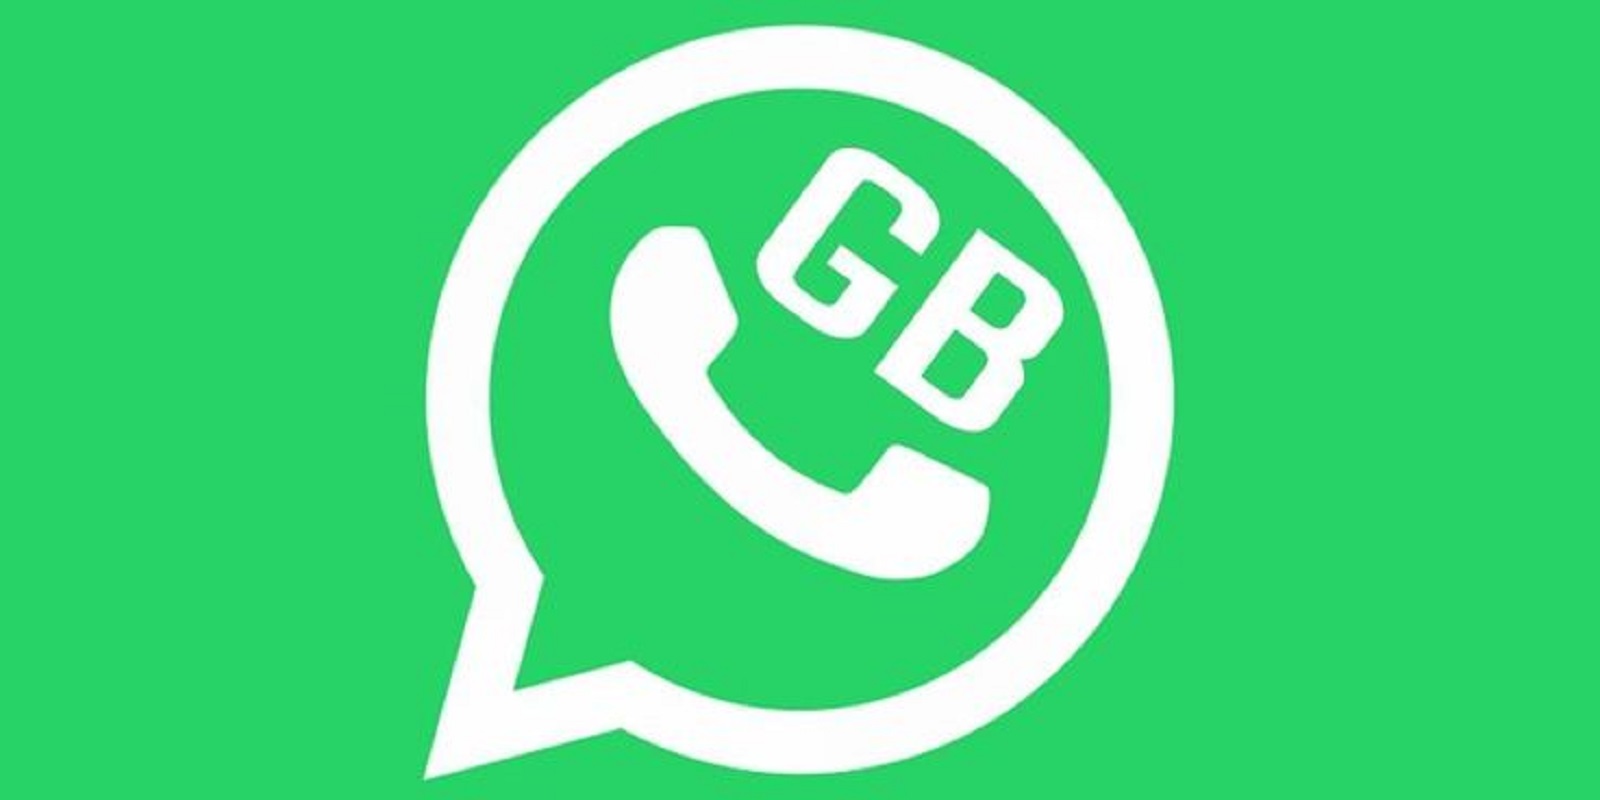  Download GB WhatsApp Clone Terbaru, WA GB v19.60 yang Bisa Multi Akun 